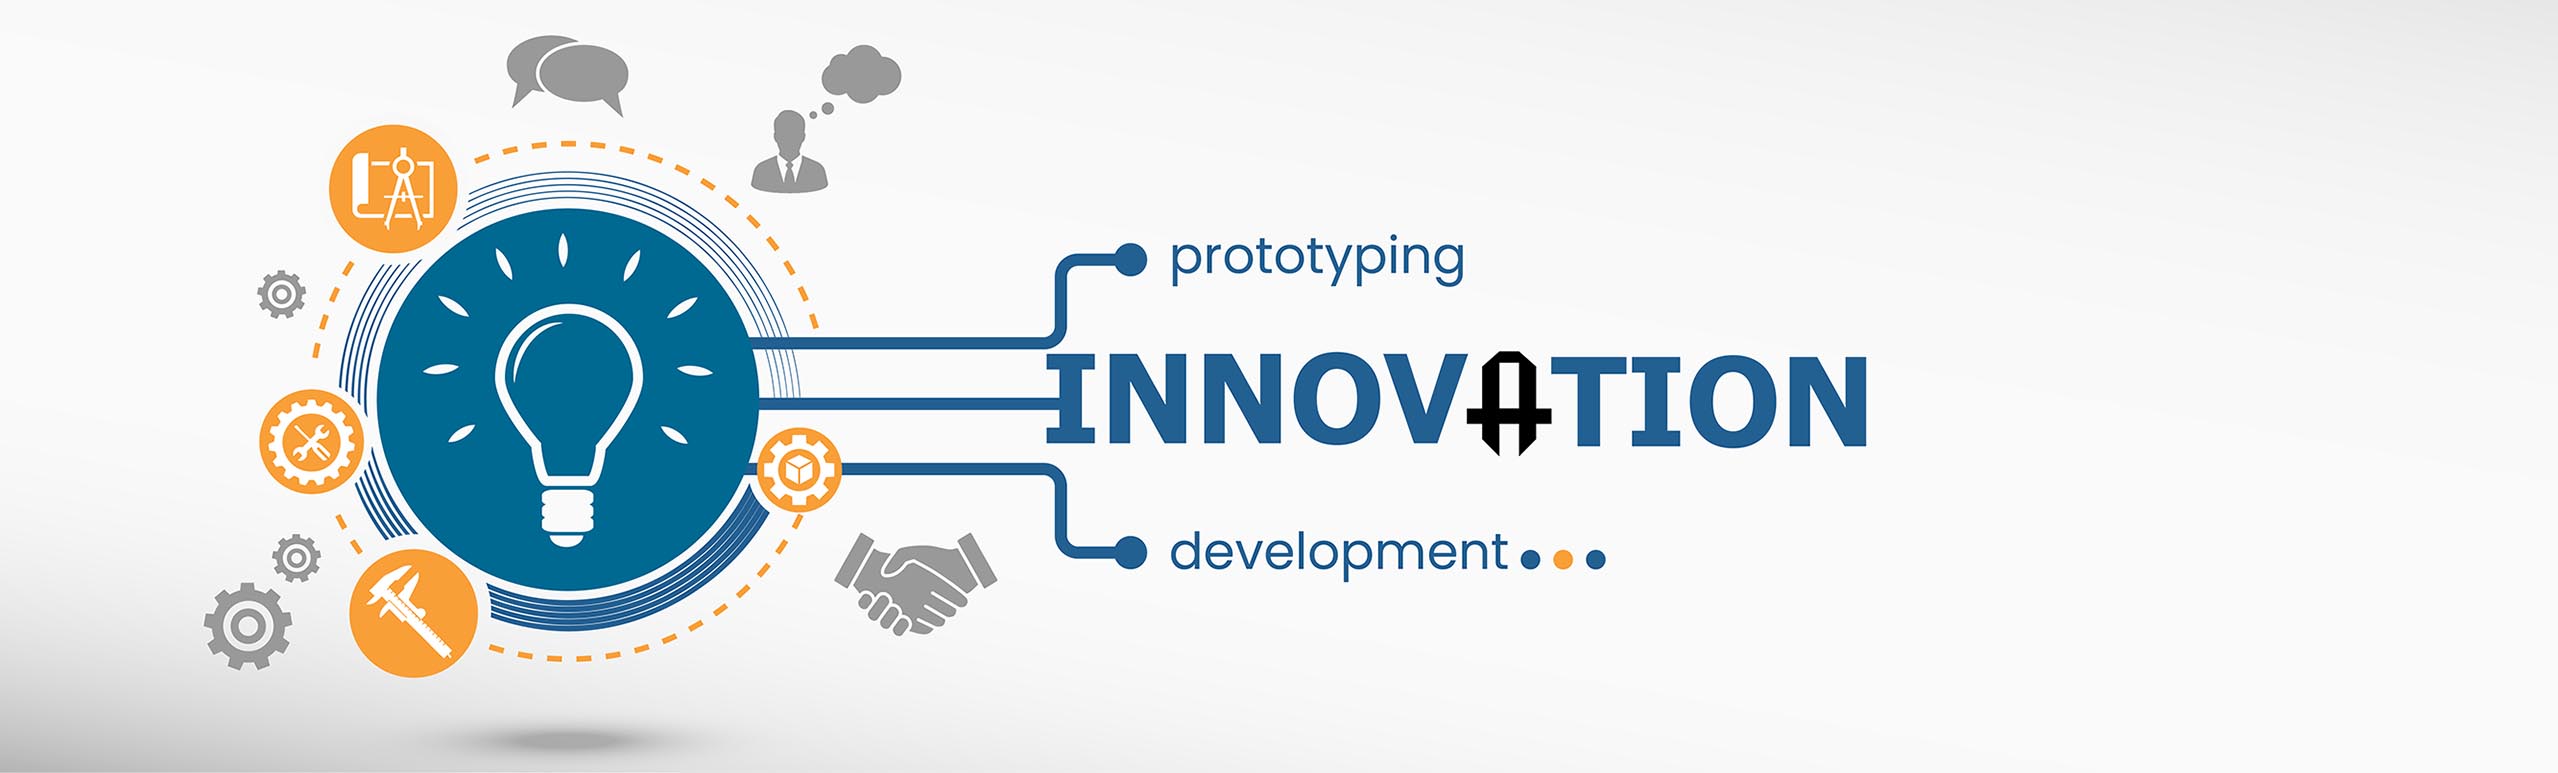 Innovation Slide